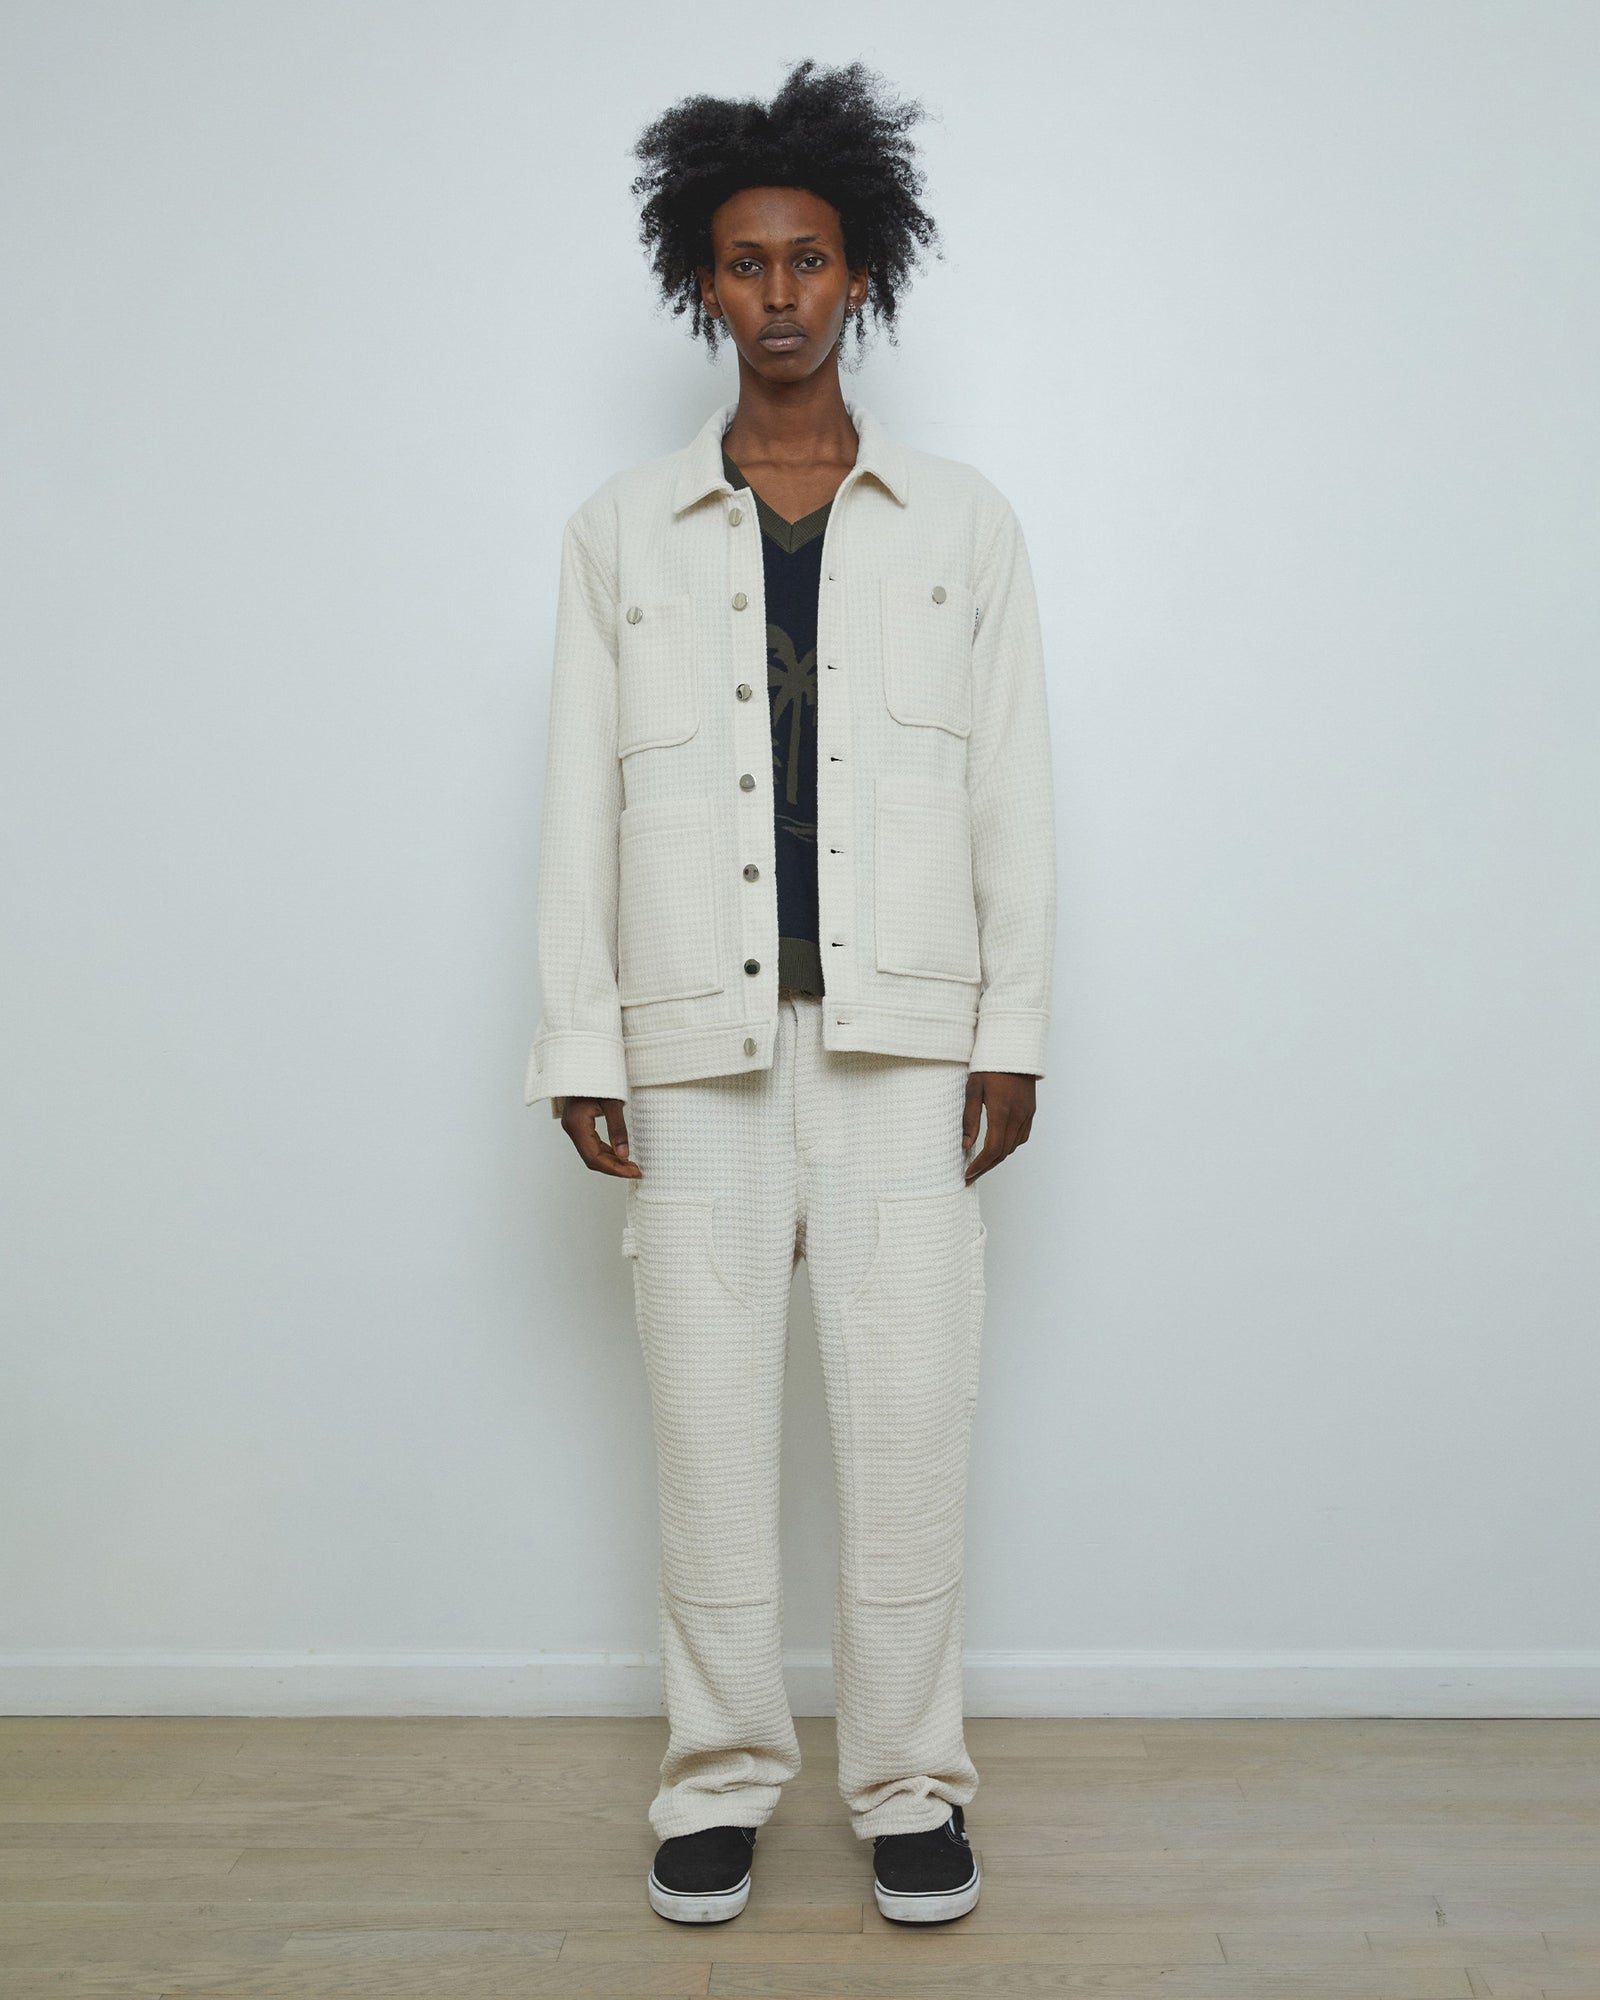 Cream Work Jacket Atlantic - mens designer fashion jackets by Krost